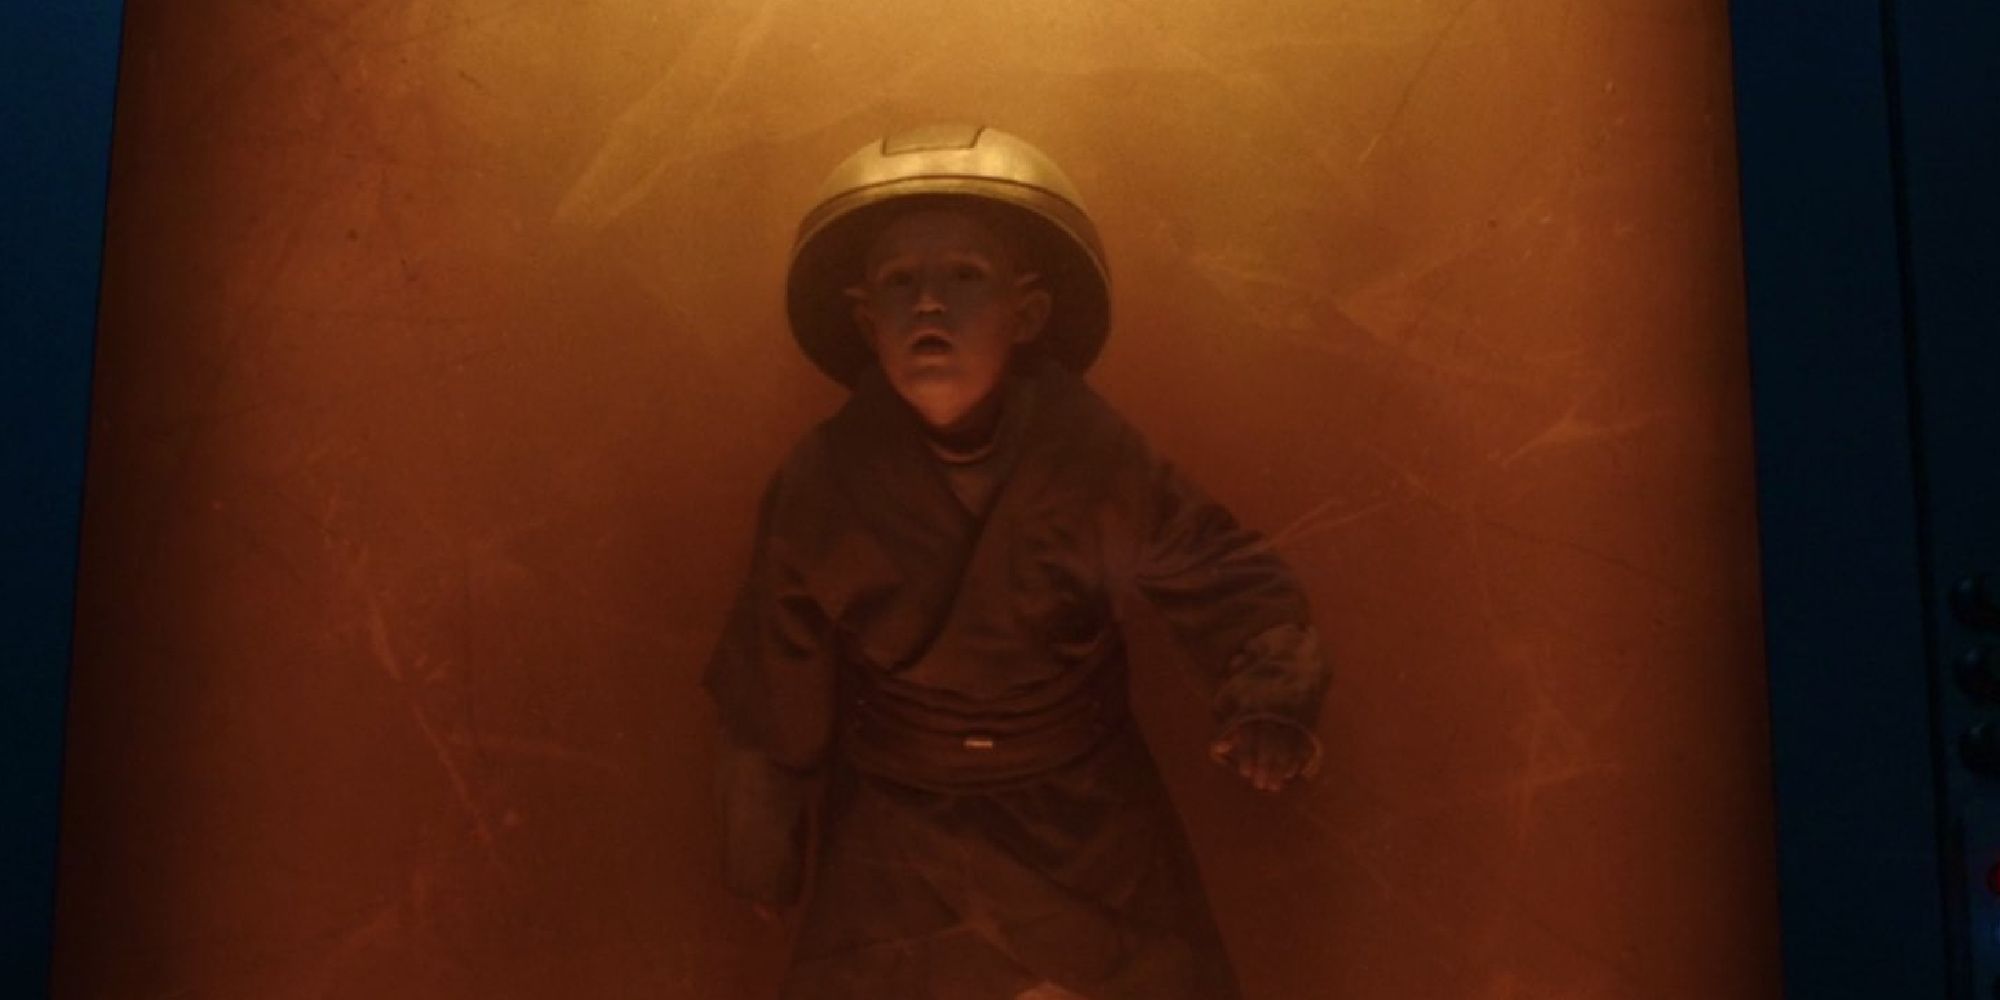 A Jedi Youngling is trapped in Obi-Wan Kenobi.